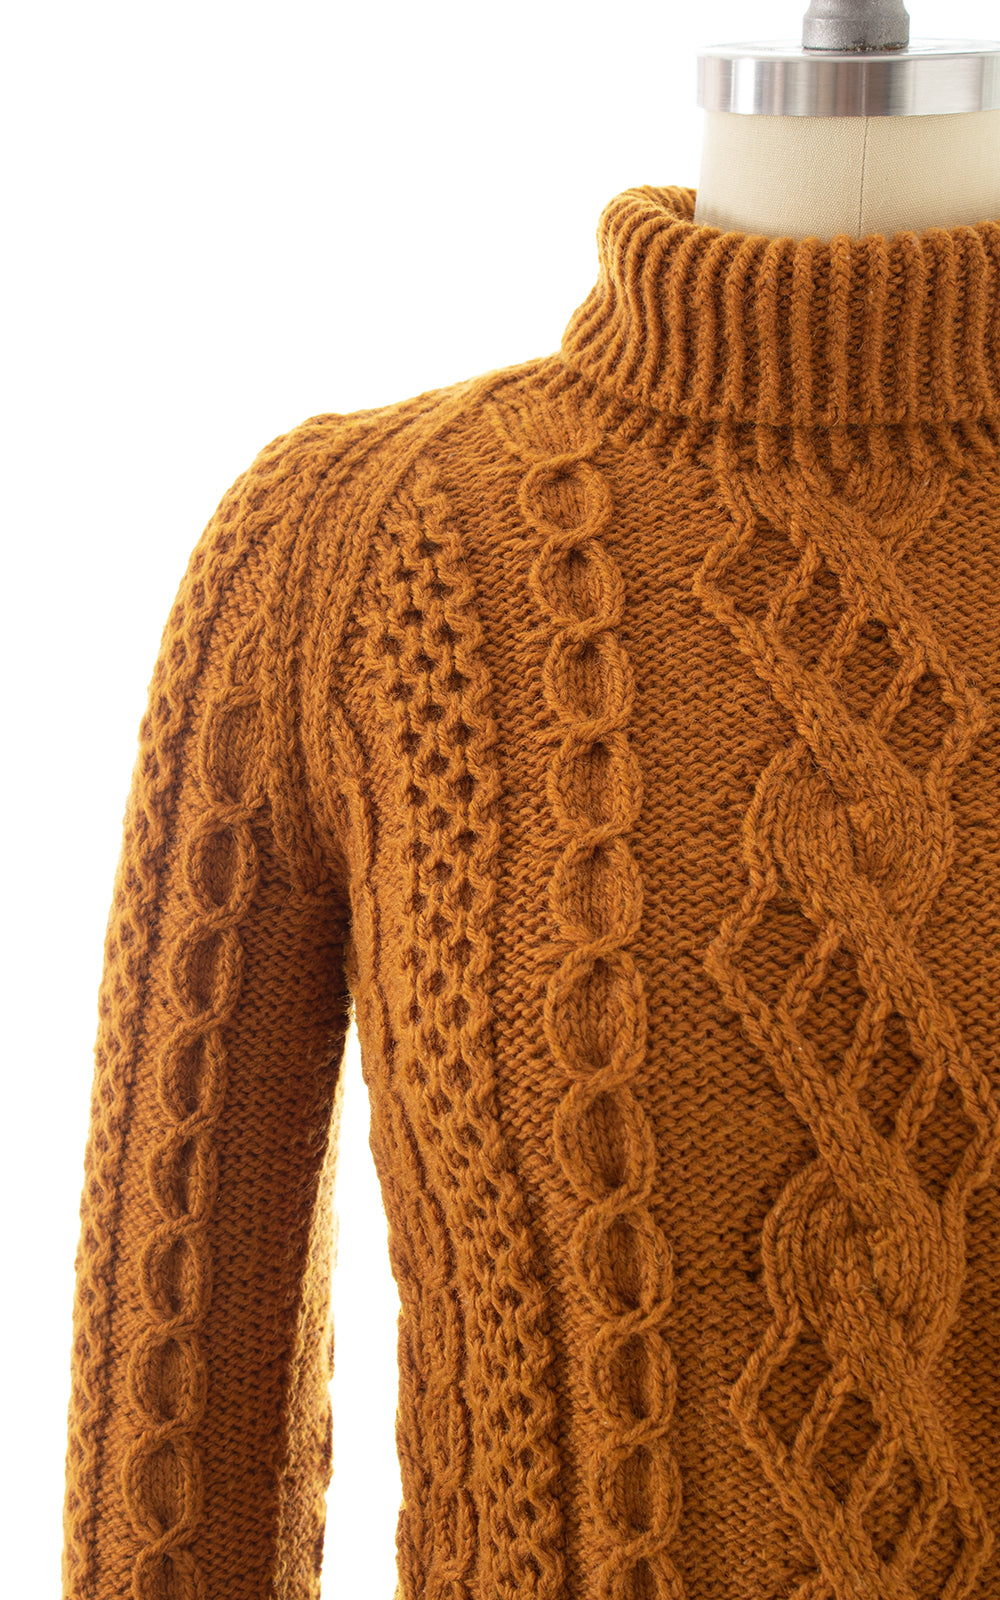 1970s Burnt Mustard Knit Wool Turtleneck Sweater BirthdayLifeVintage